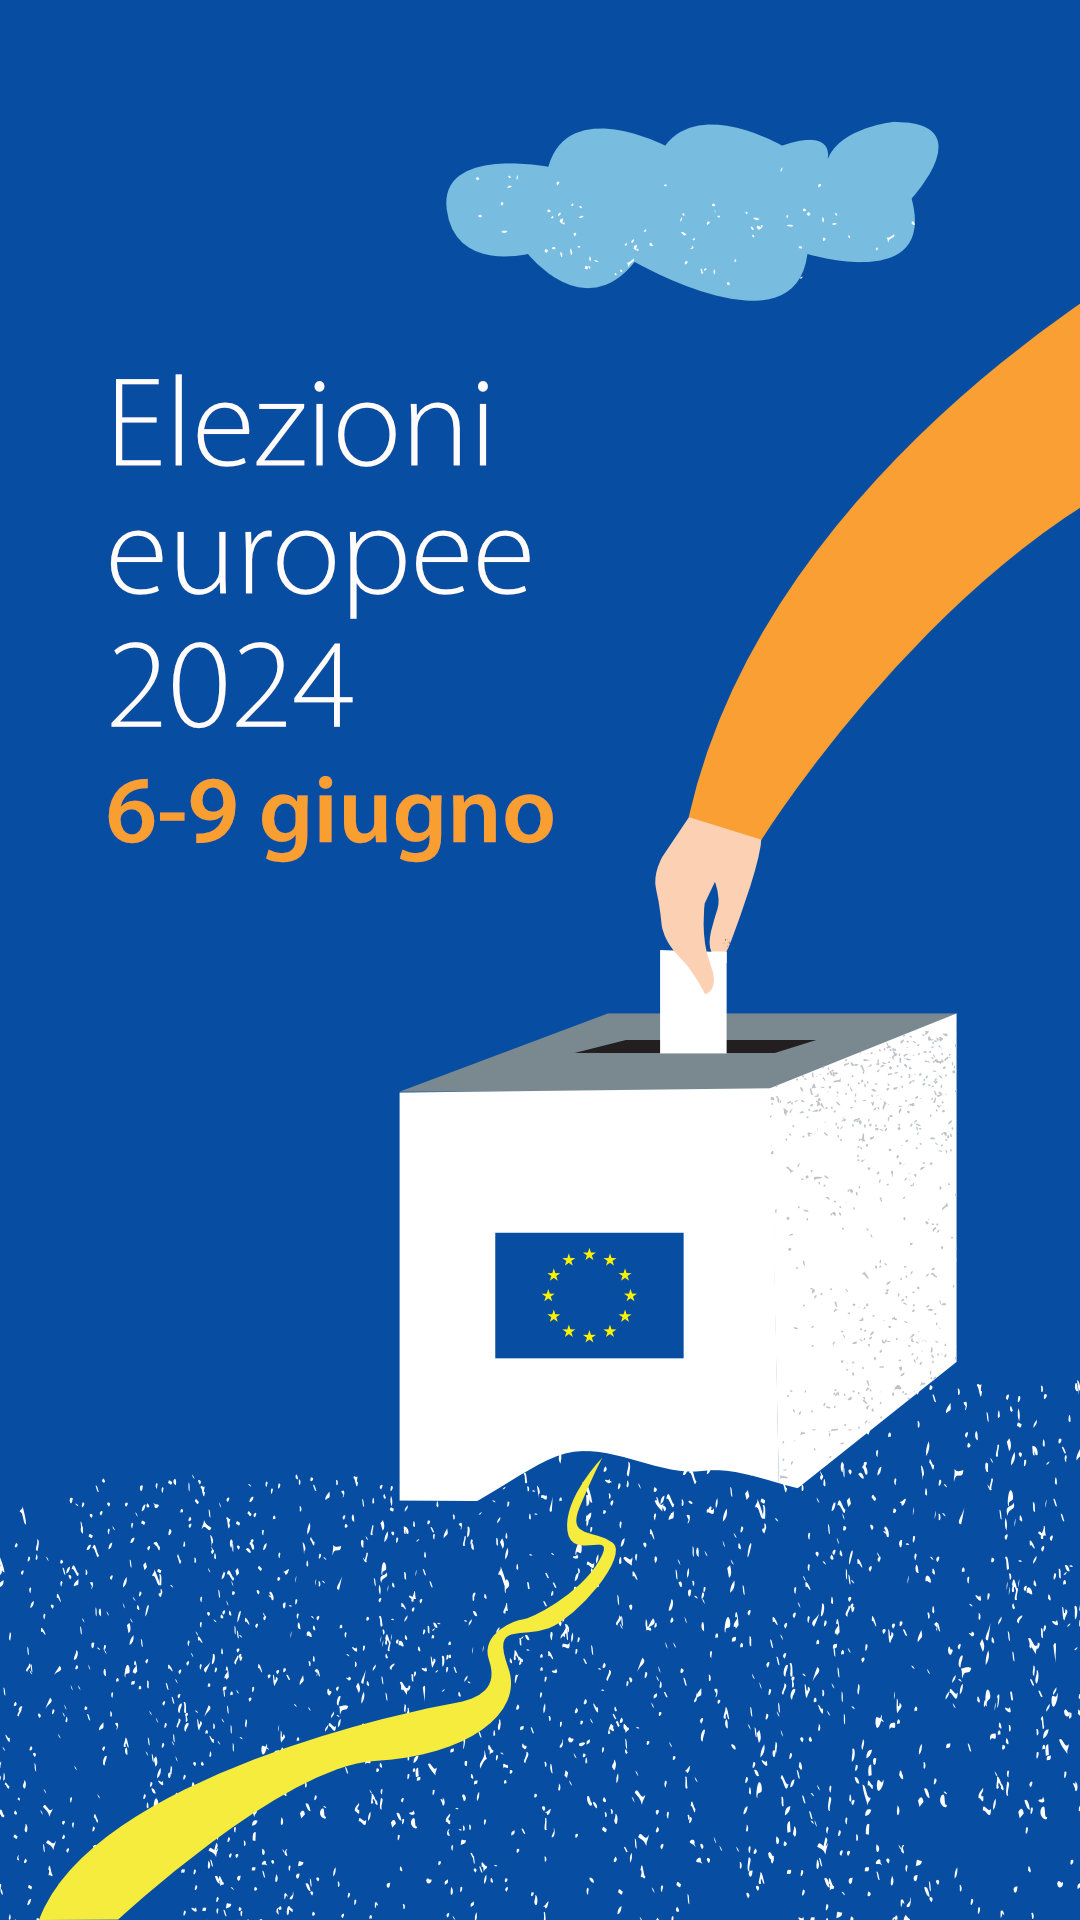 Elezioni europee 2024 - Story